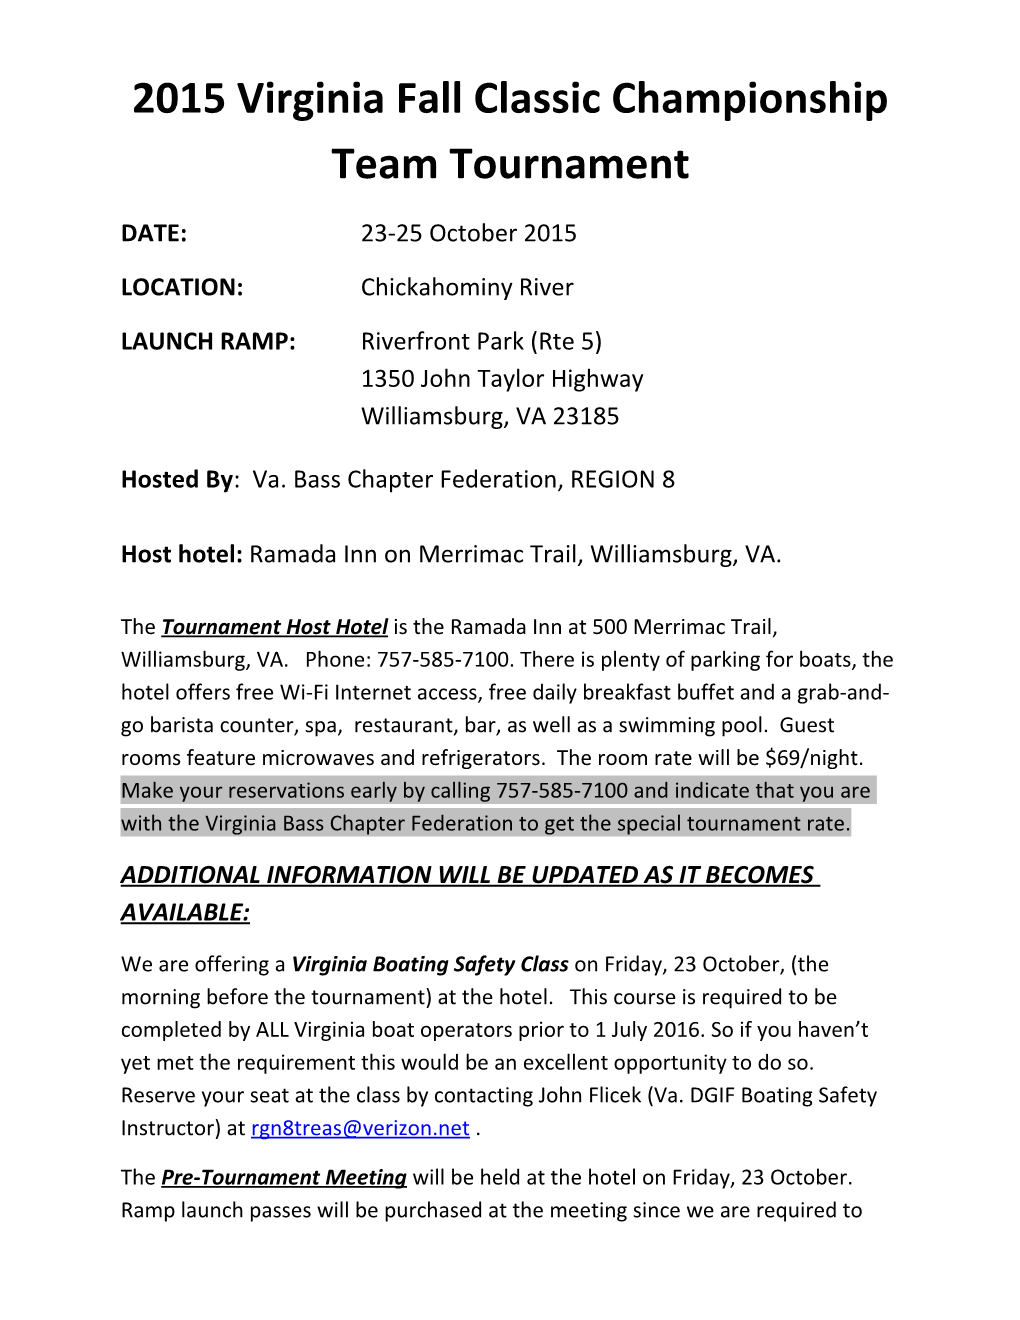 2015 Virginia Fall Classic Championship Team Tournament